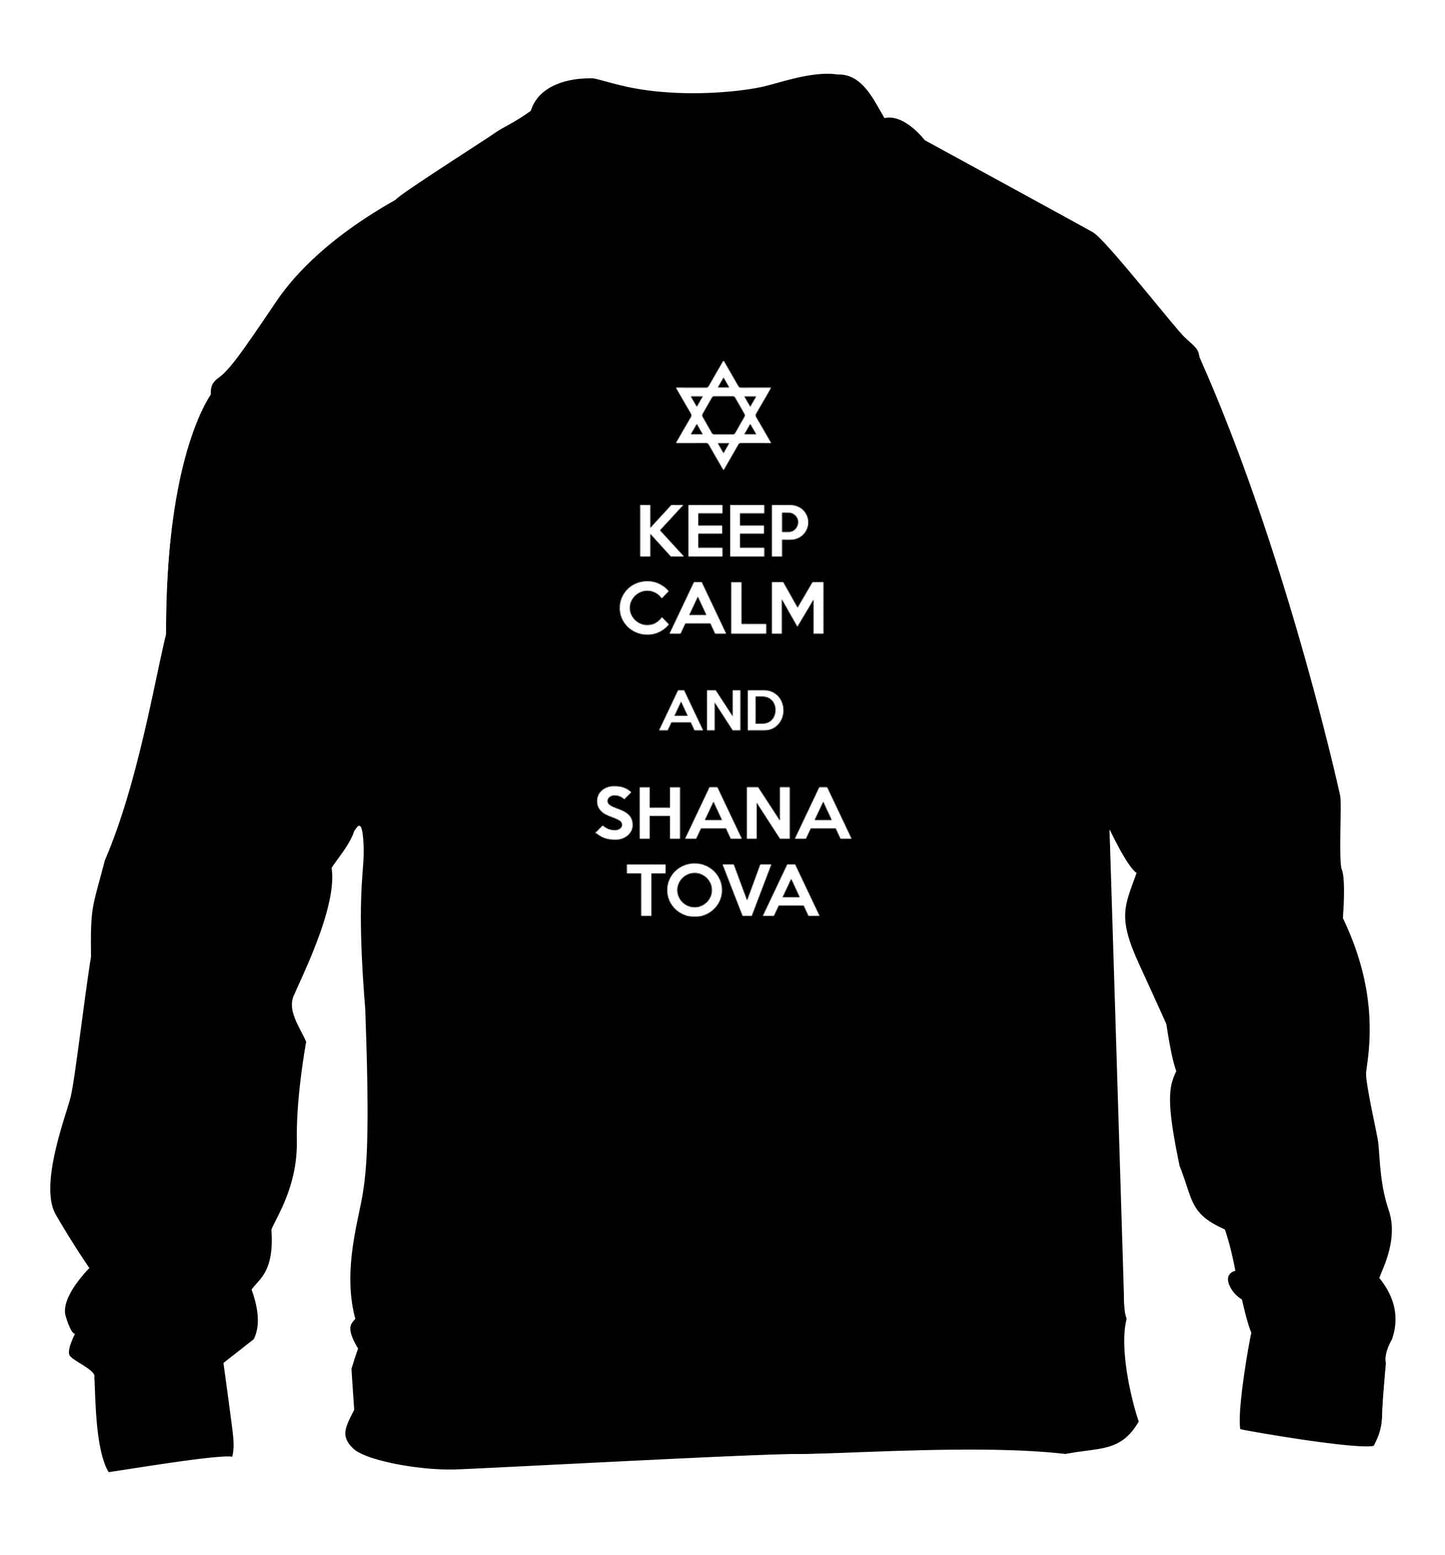 Keep calm and shana tova children's black sweater 12-13 Years